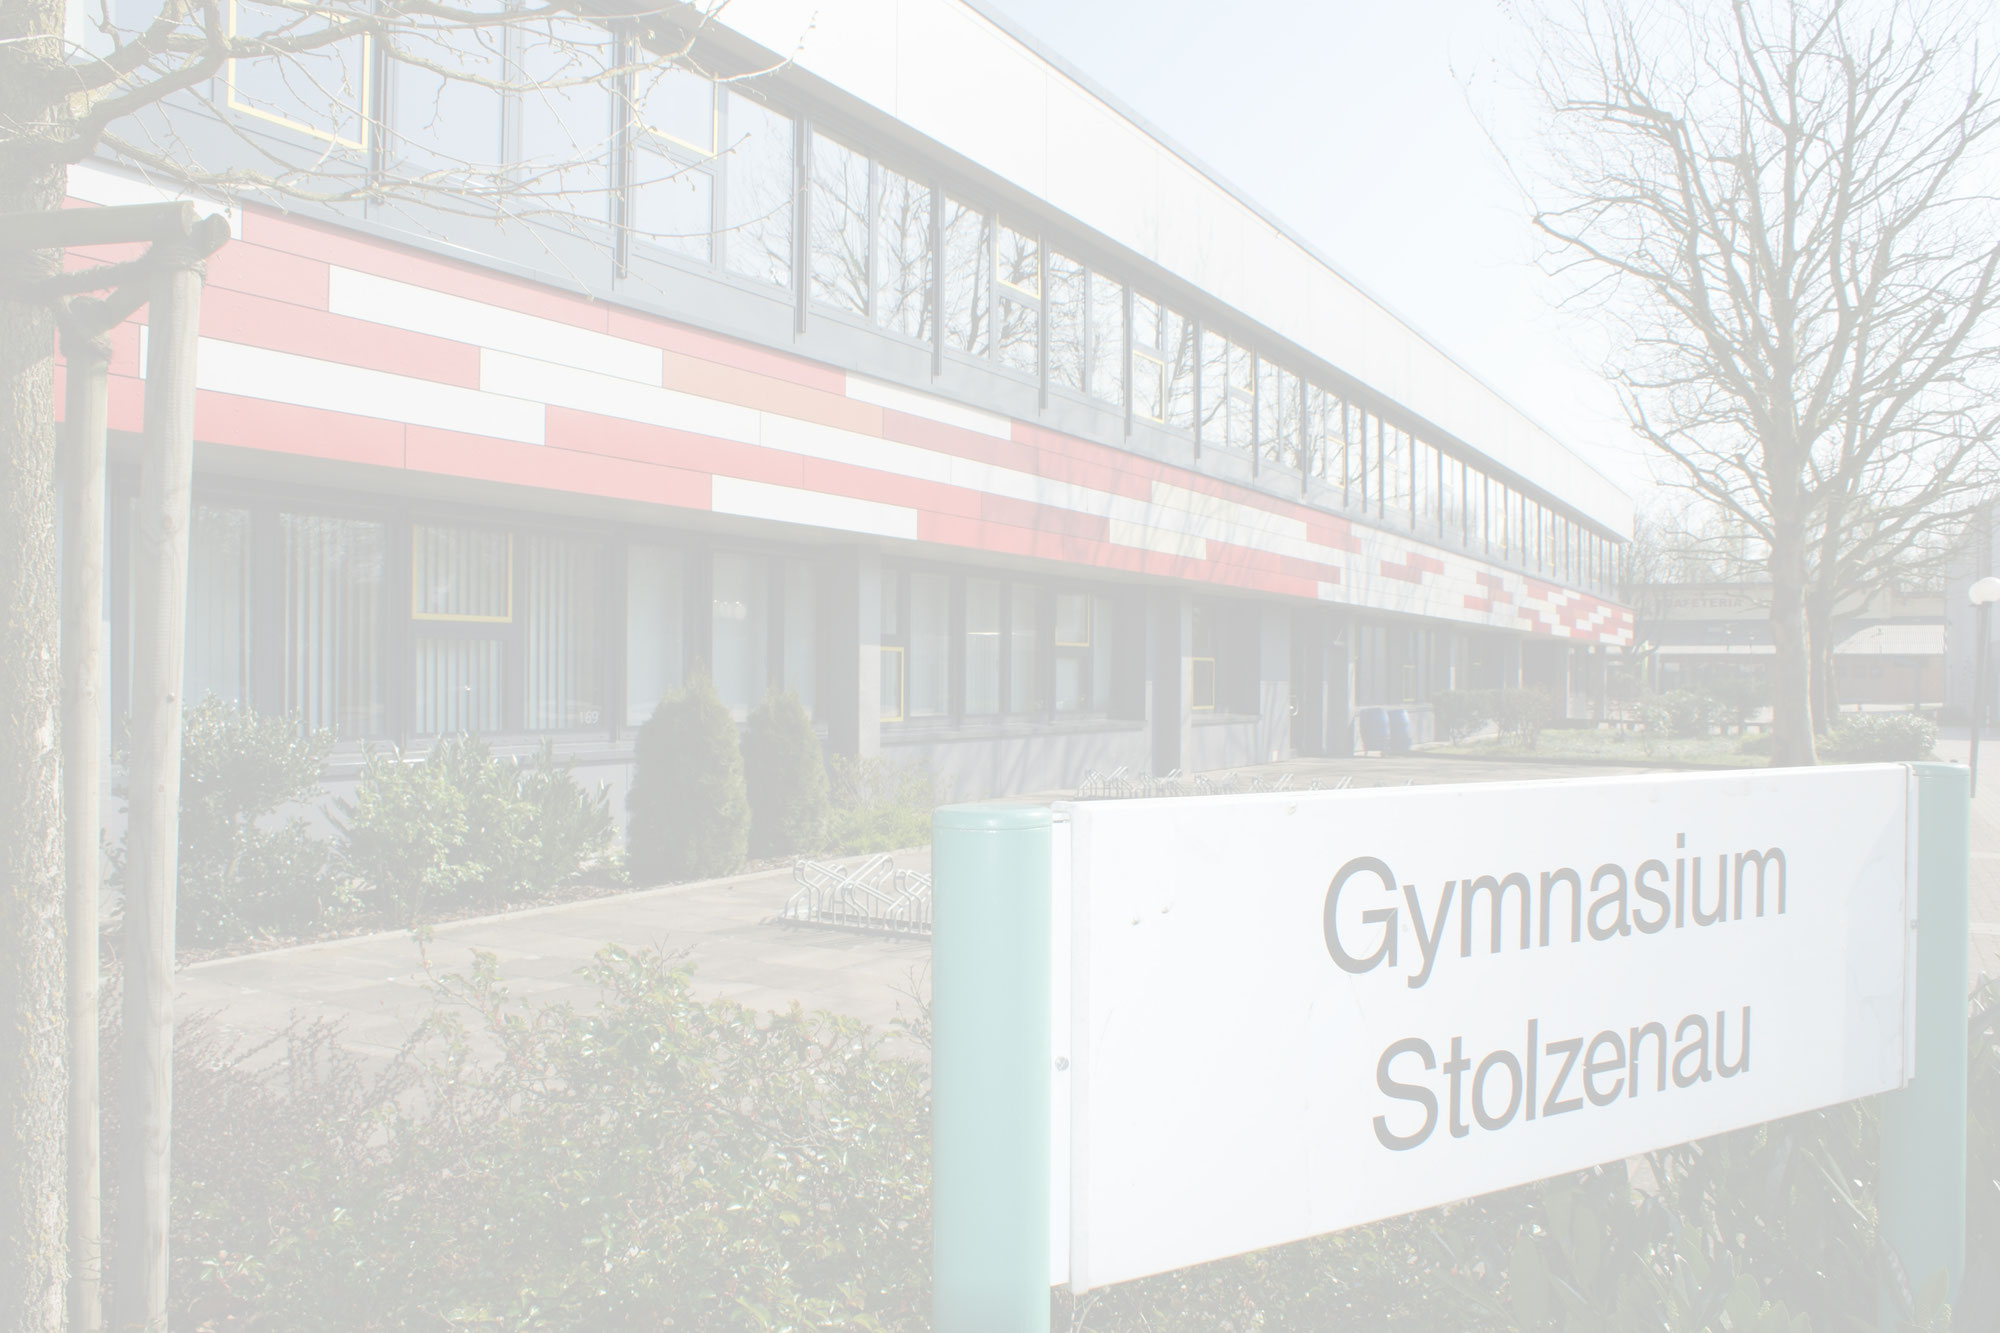 (c) Alumni-gymnasium-stolzenau.de